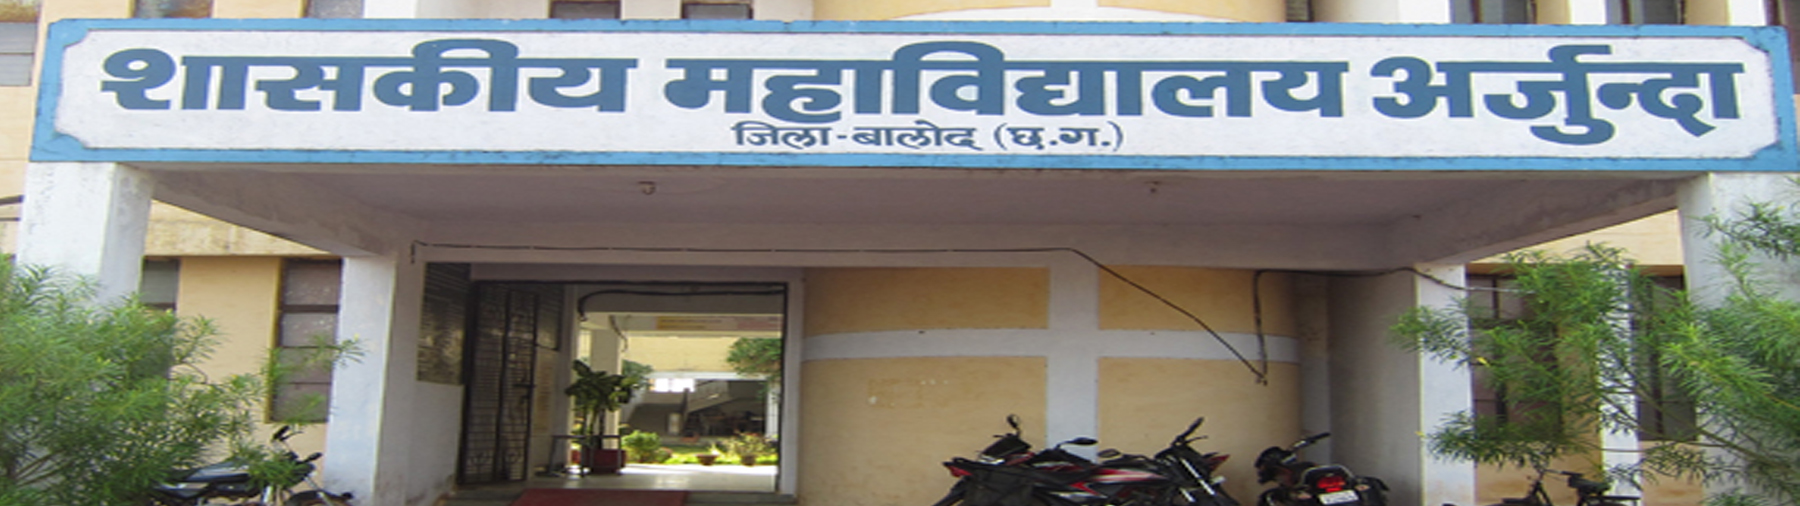 Govt. College Arjunda, District- Balod, (Chhattisgarh)